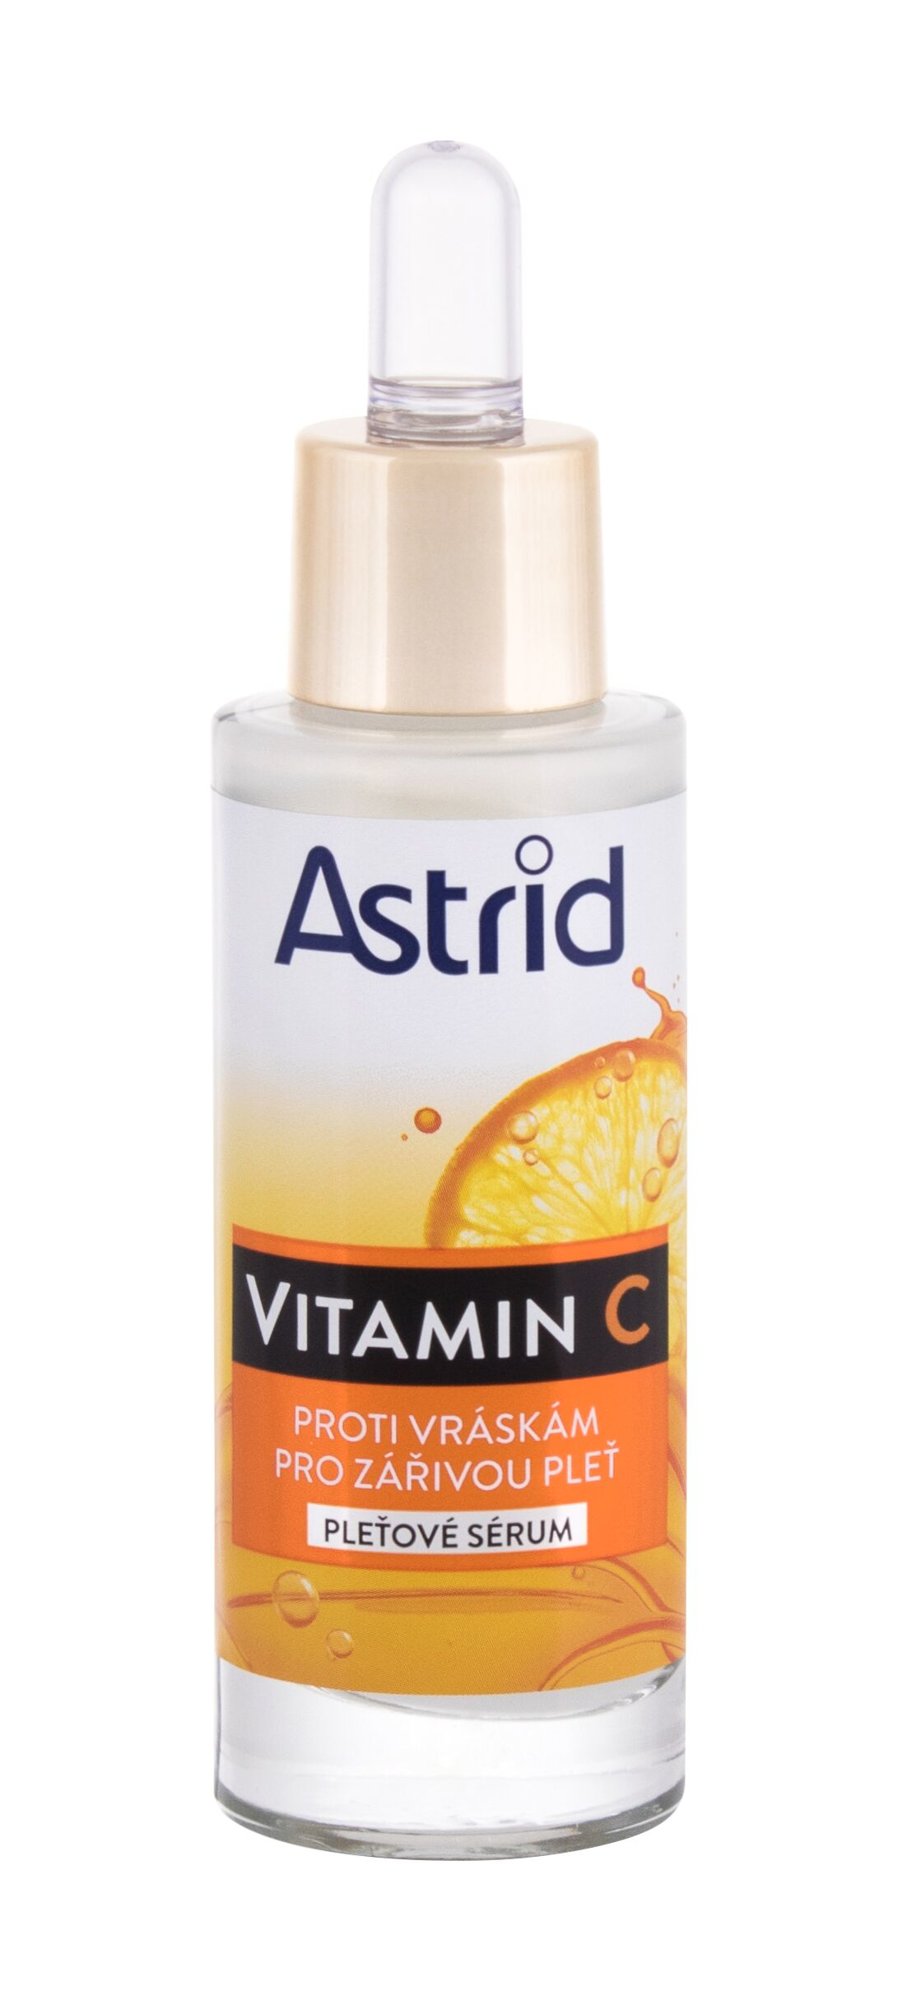 Astrid Vitamin C 30ml Veido serumas